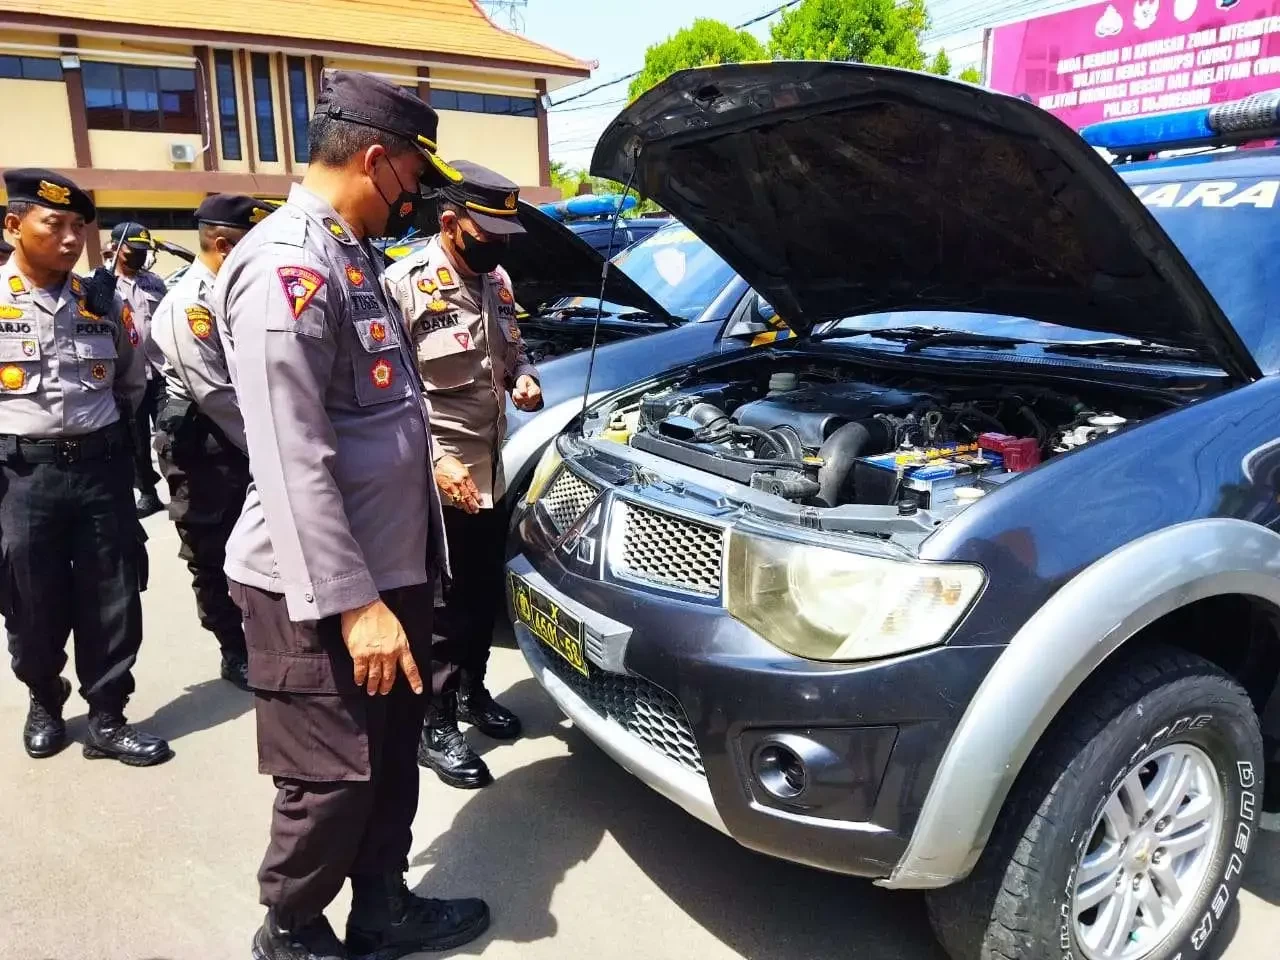 Kapolres Bojonegoro AKBP Muhammad mengecek kesiapan puluhan kendaraan untuk membantu pengamanan Pilkades serentak di 33 desa di Bojonegoro pada 26 Oktober 2022. (Foto: Humas Polres Bojonegoro)